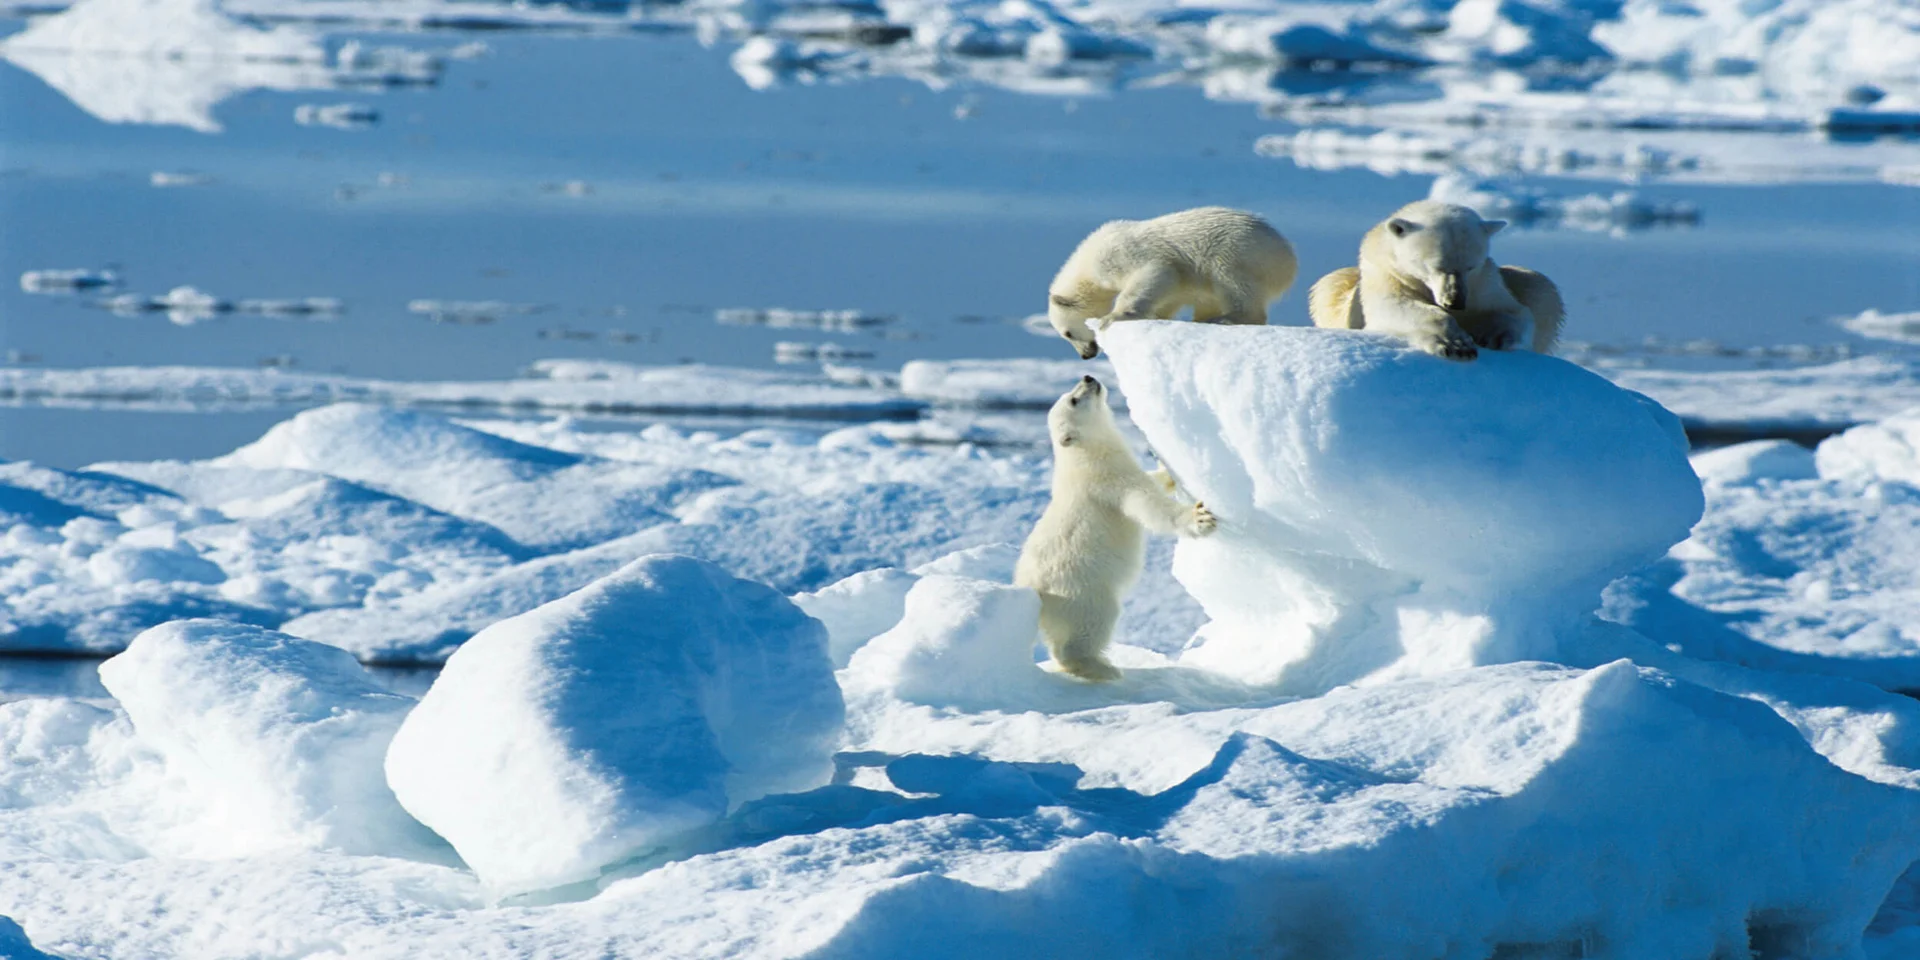 8 fakta du ikke visste om isbjørner